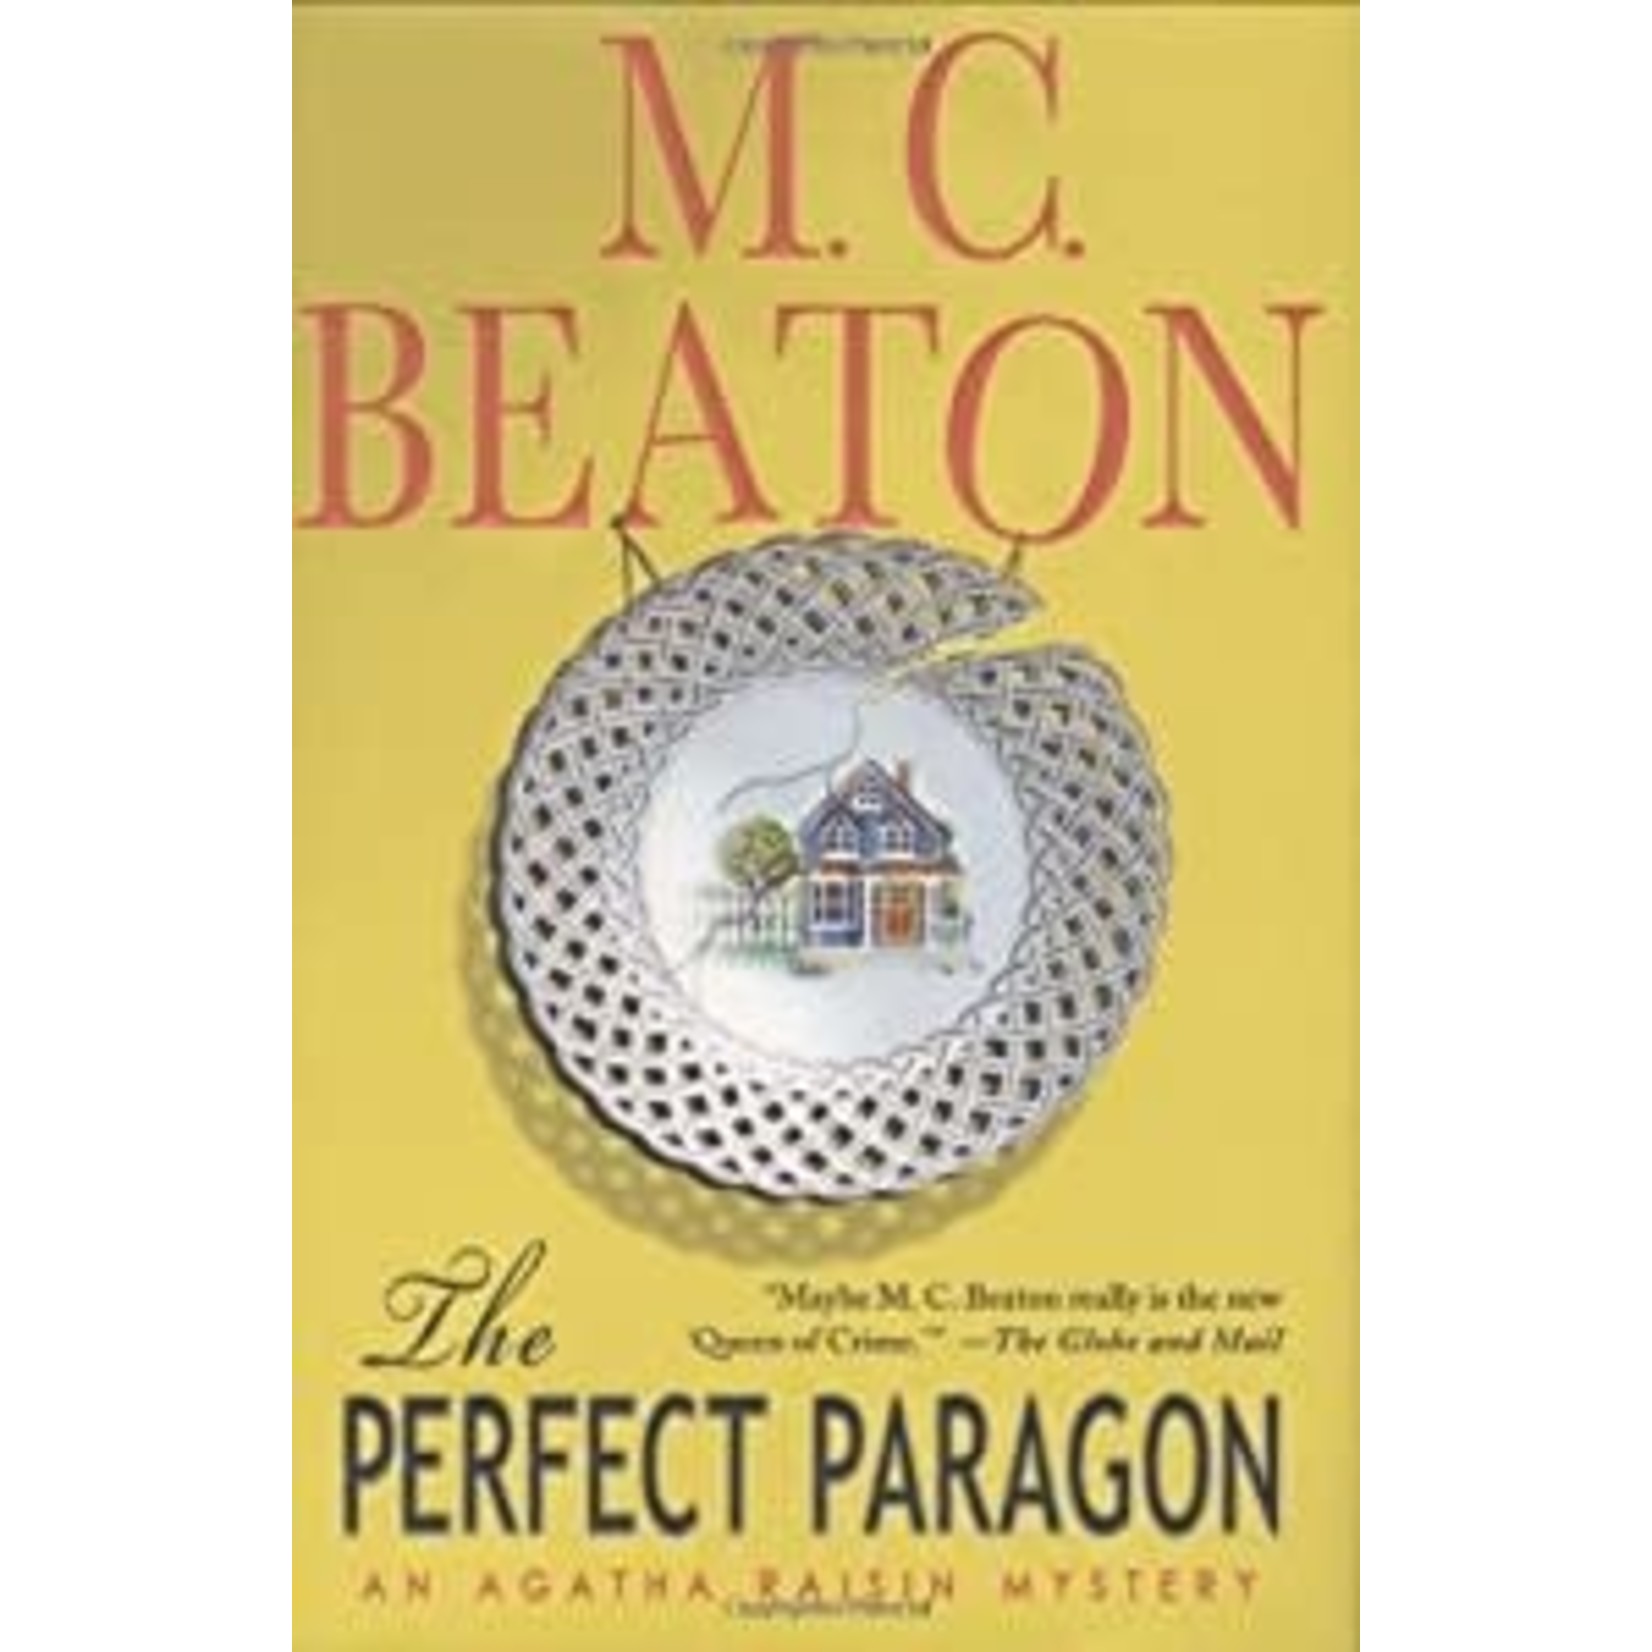 Beaton, M. C. Beaton, M. C. -  The Perfect Paragon (HC, 1st Edition)